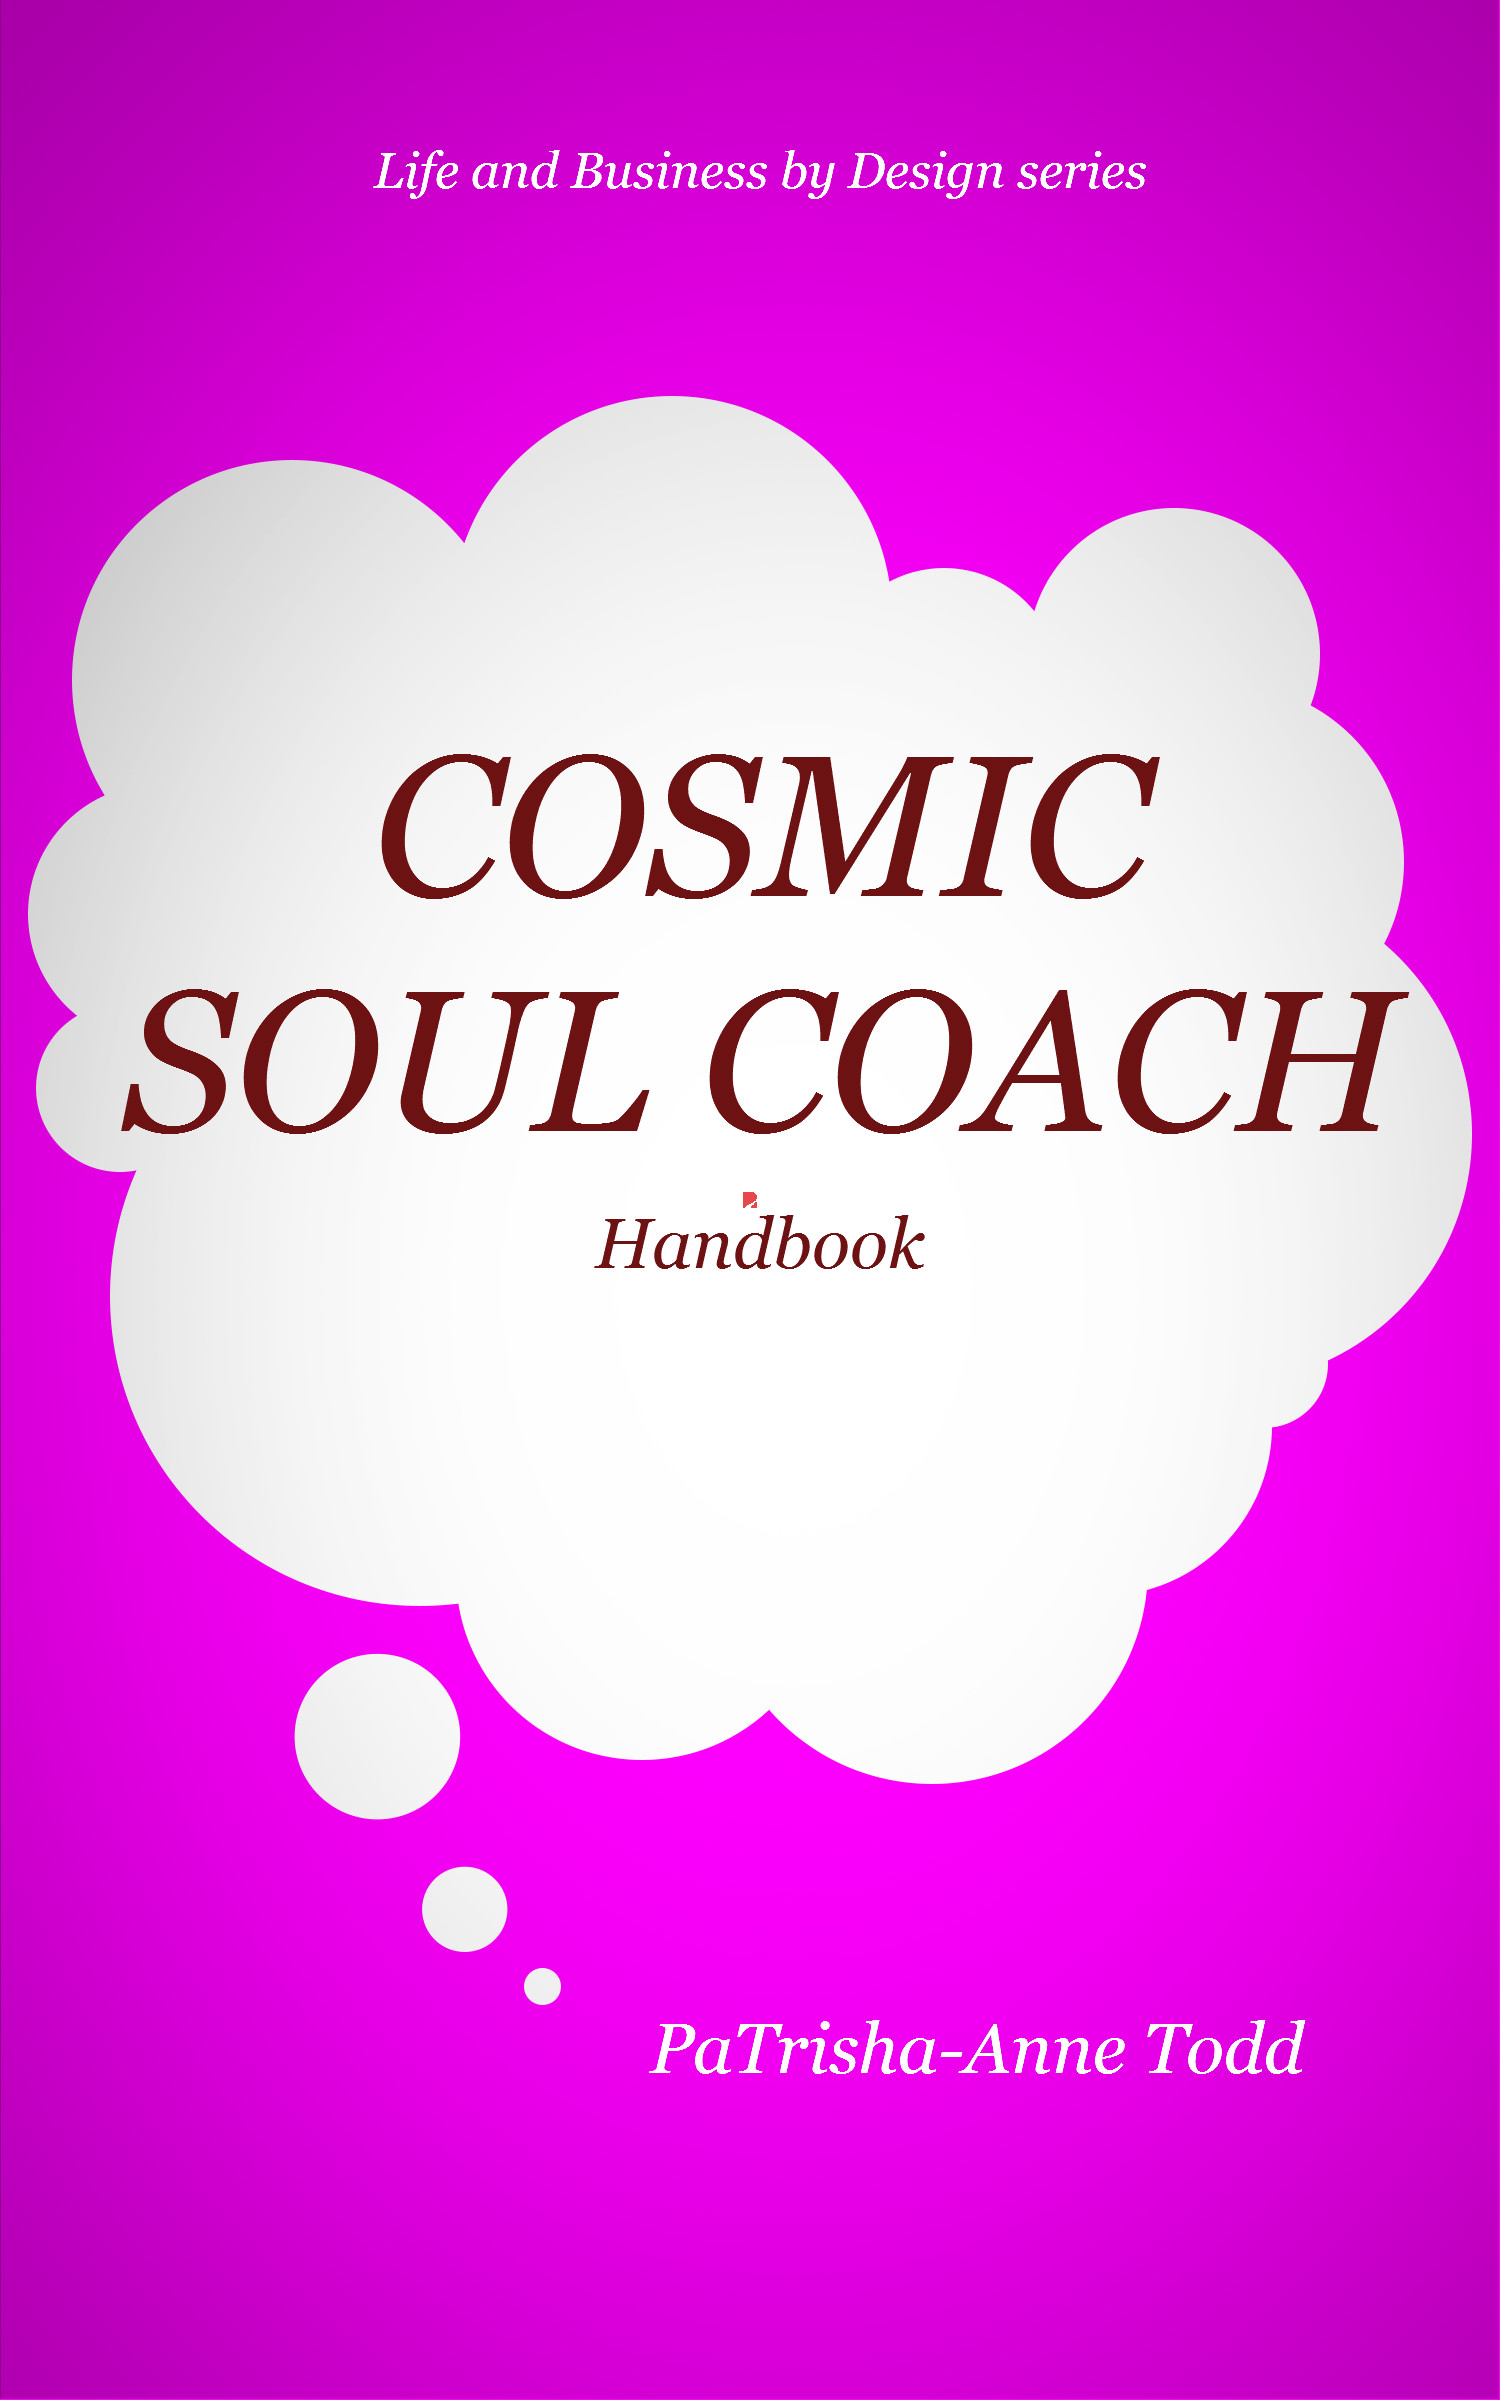 Cosmic Soul Coach Training with Master Cosmic Soul Coach PaTrisha-Anne Todd